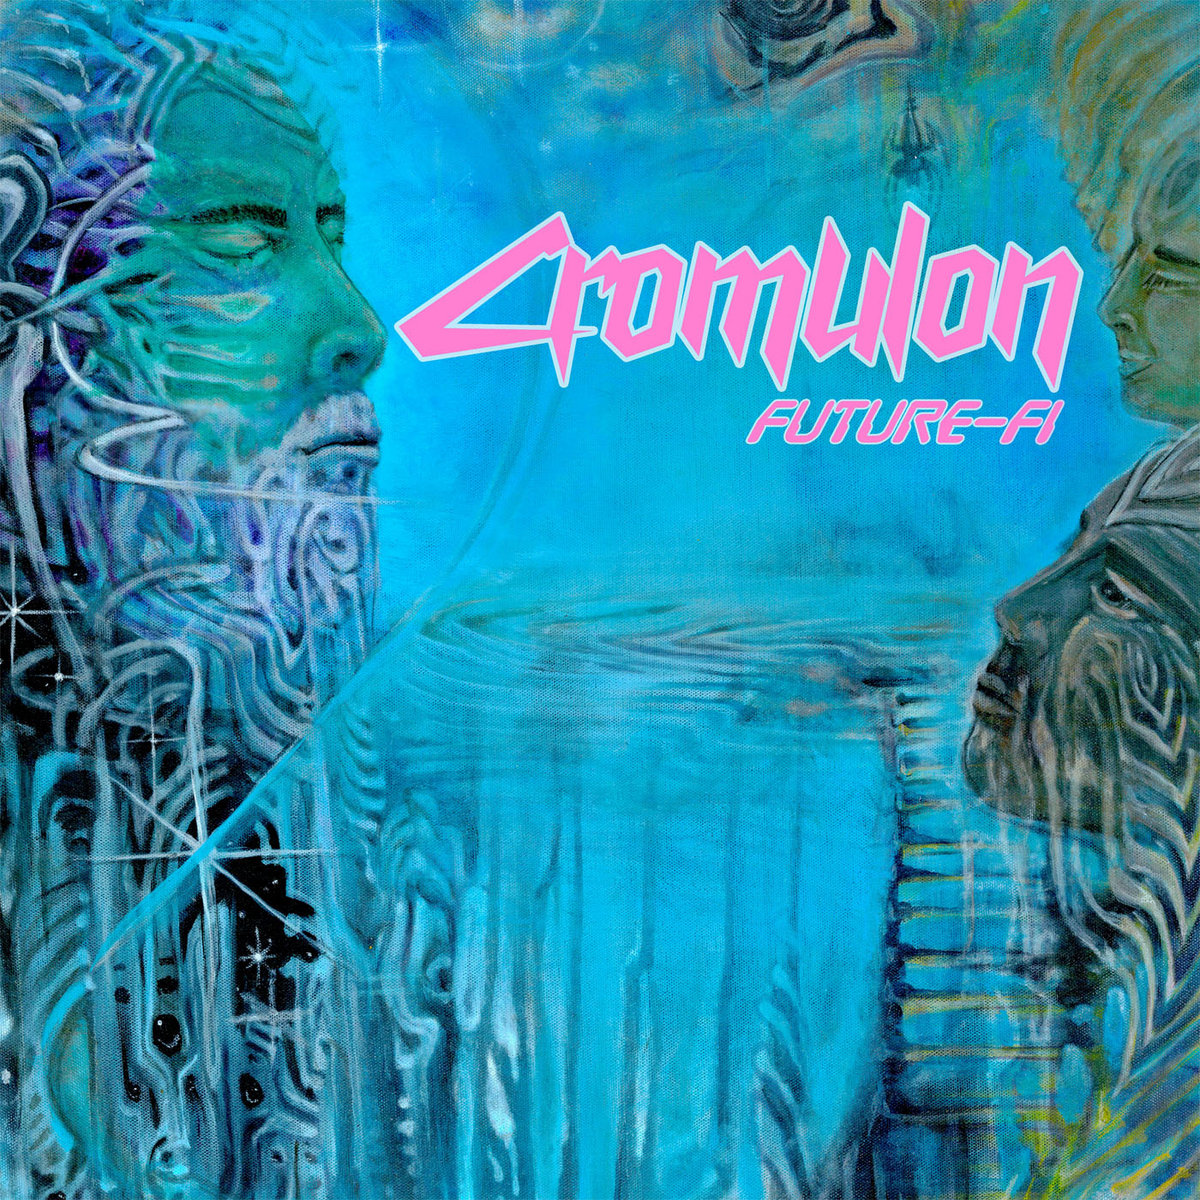 Future-Fi | CROMULON | Jumpsuit Records